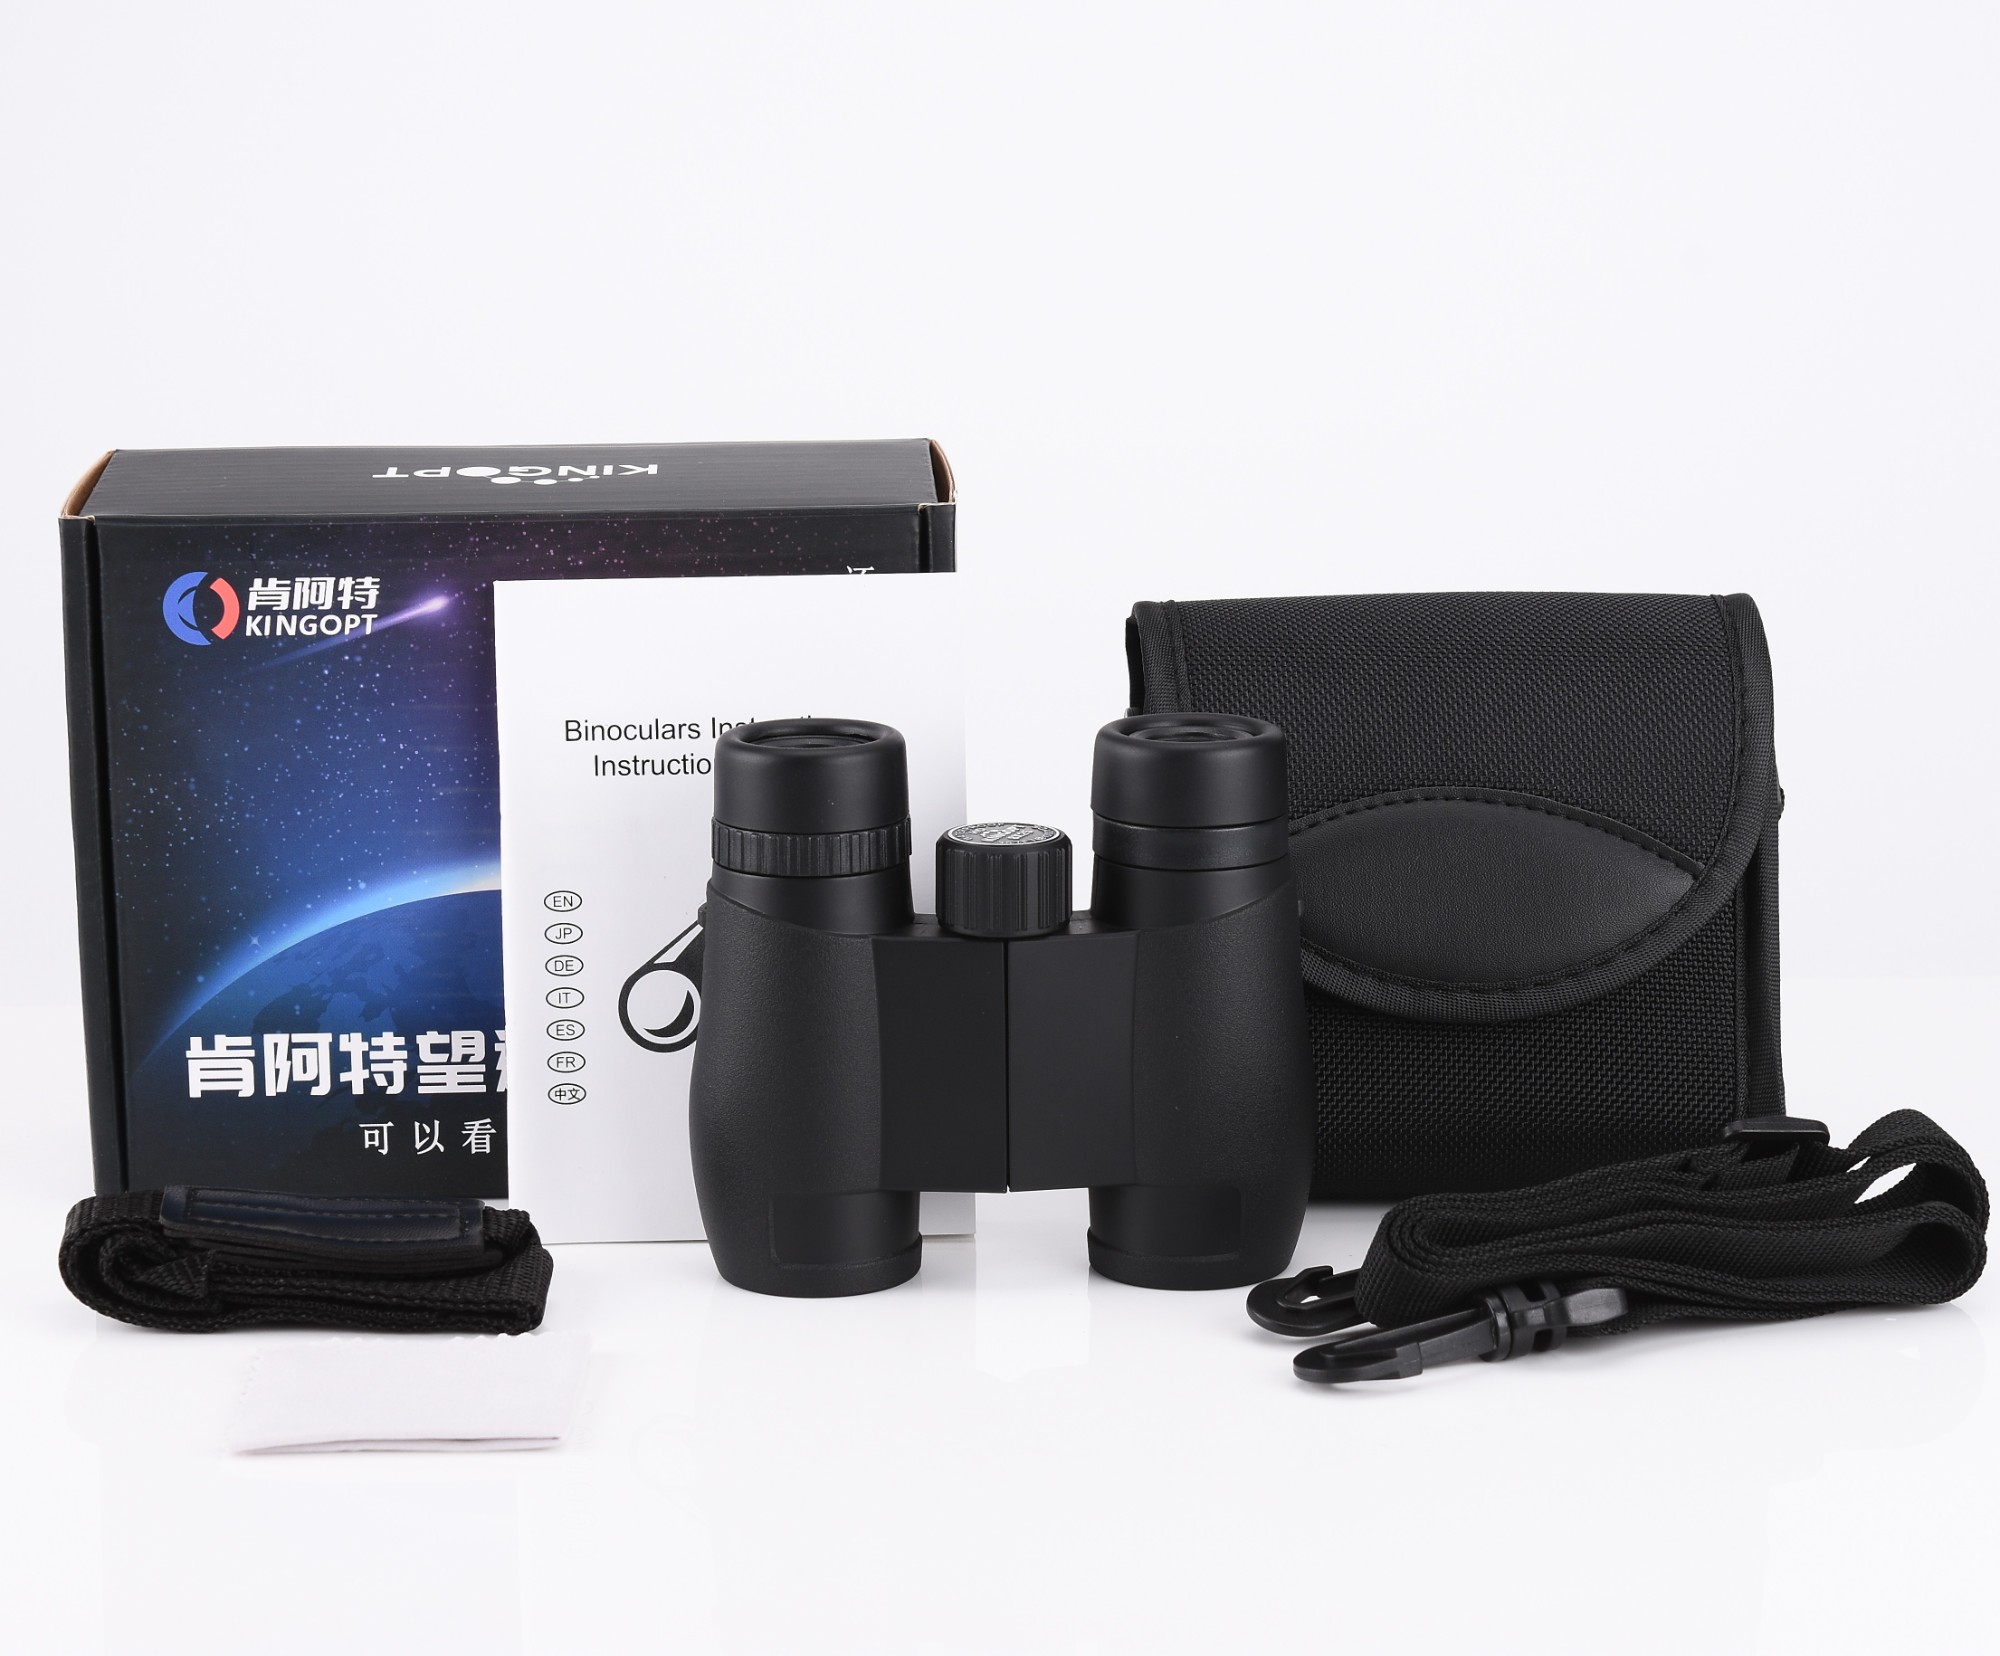 New compact waterproof 8x25 and 10x25 binoculars